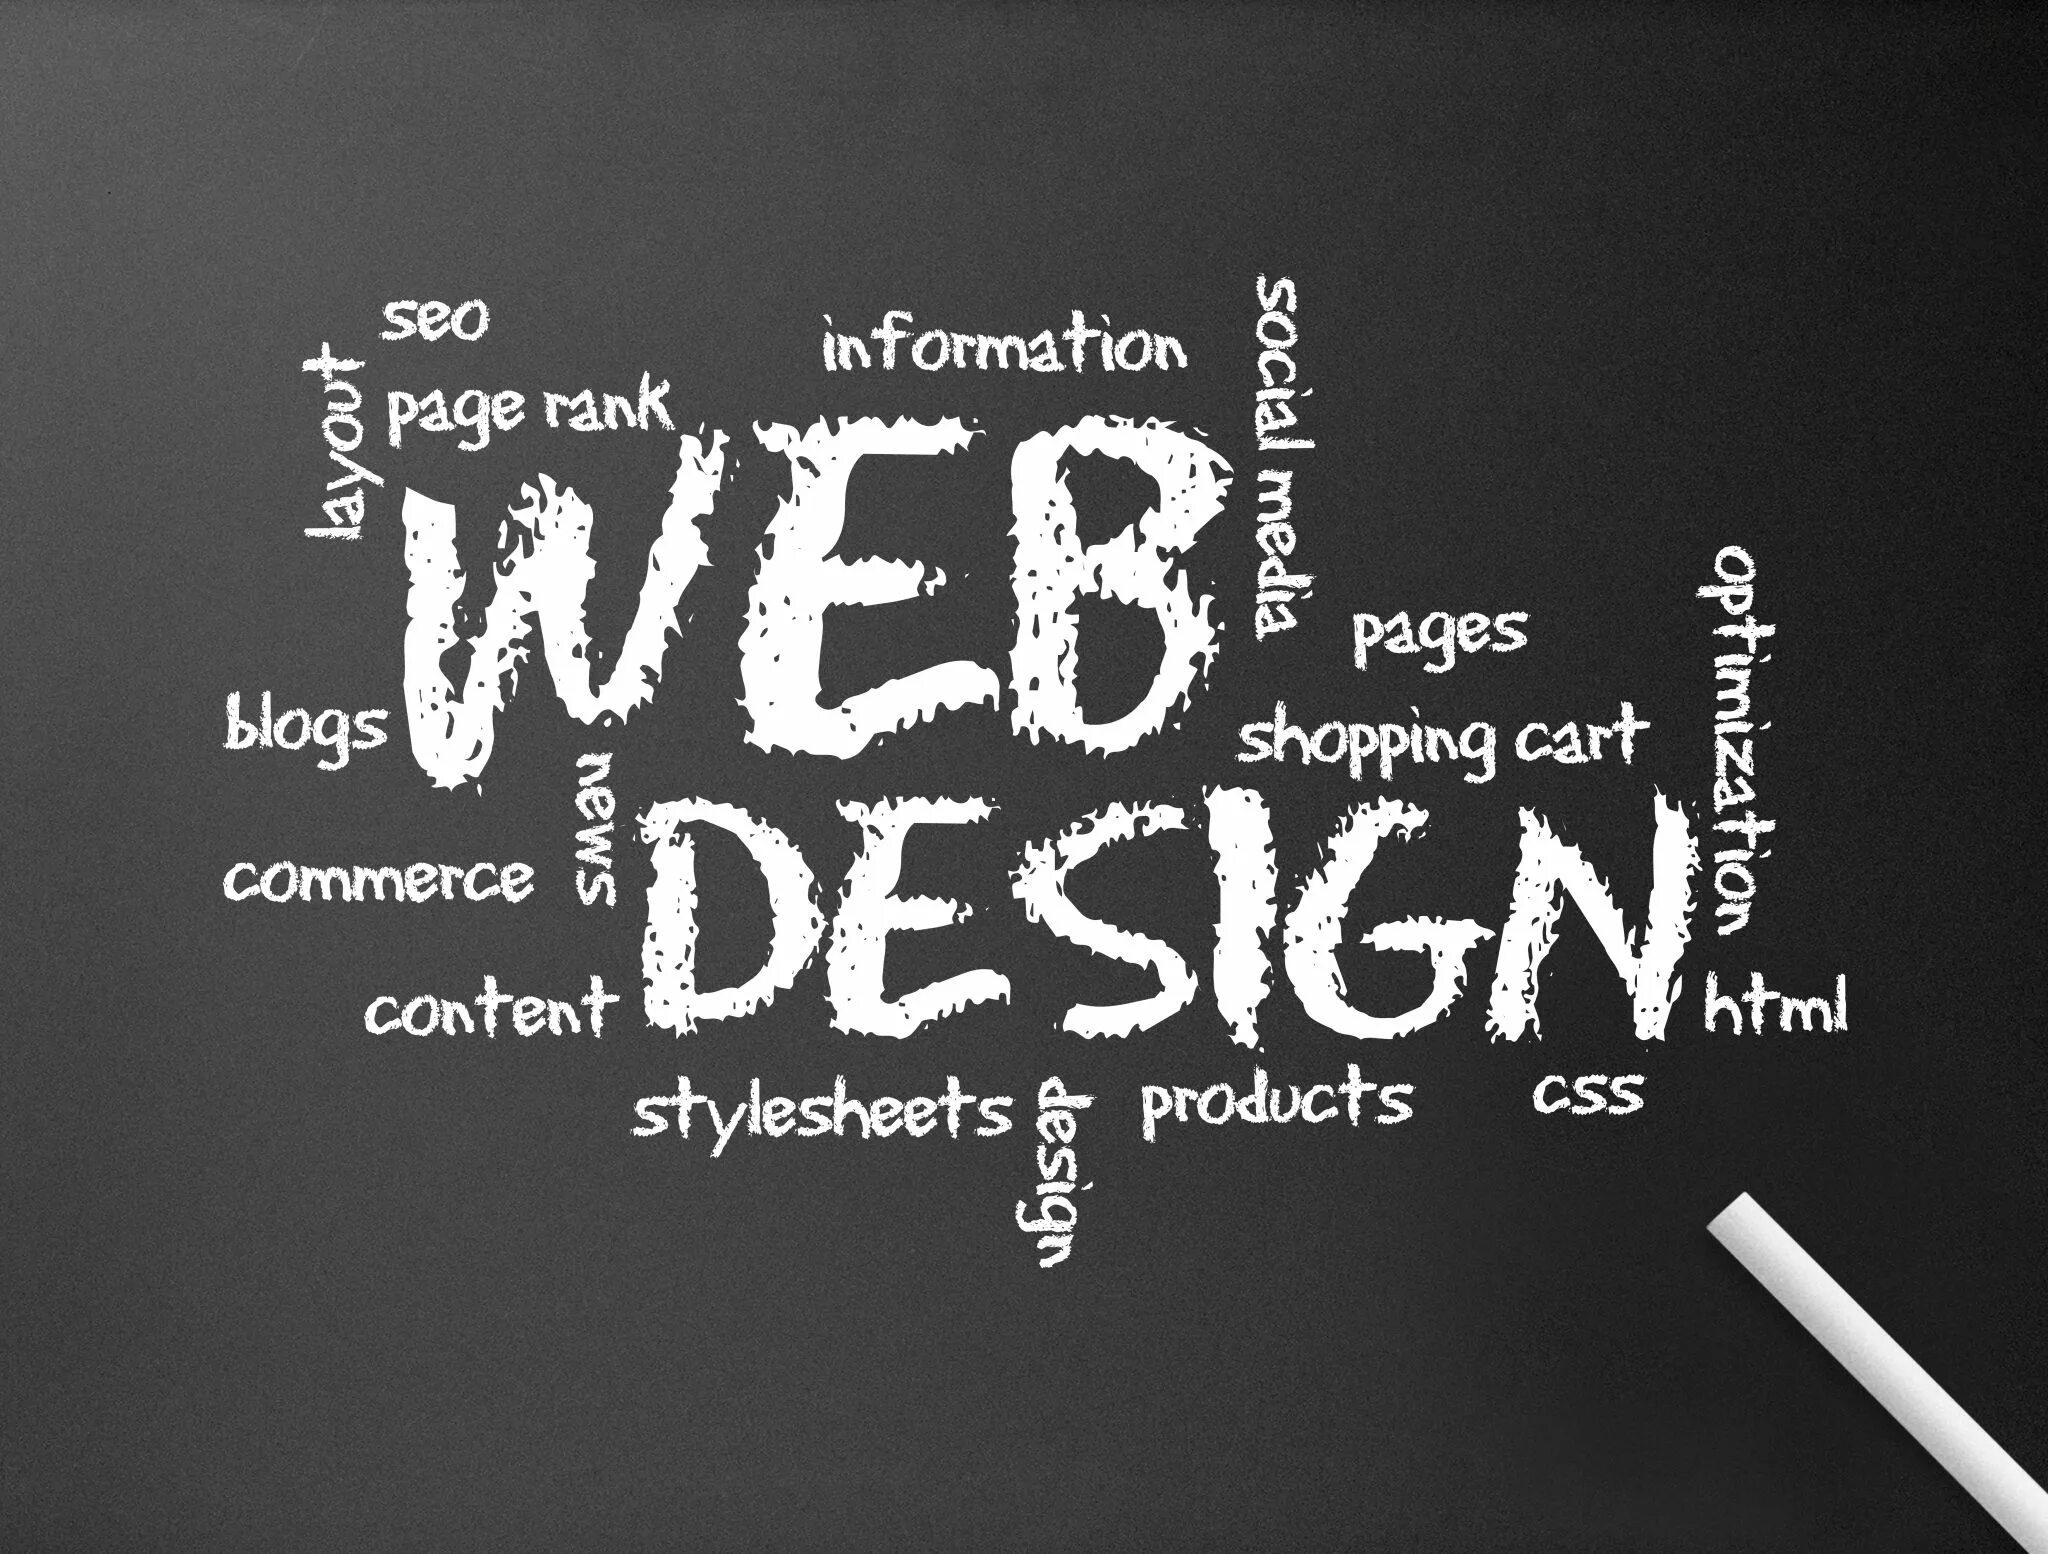 Web design is. Веб дизайн. Web dizayn. Веб дизайнер. Веб дизайн надпись.